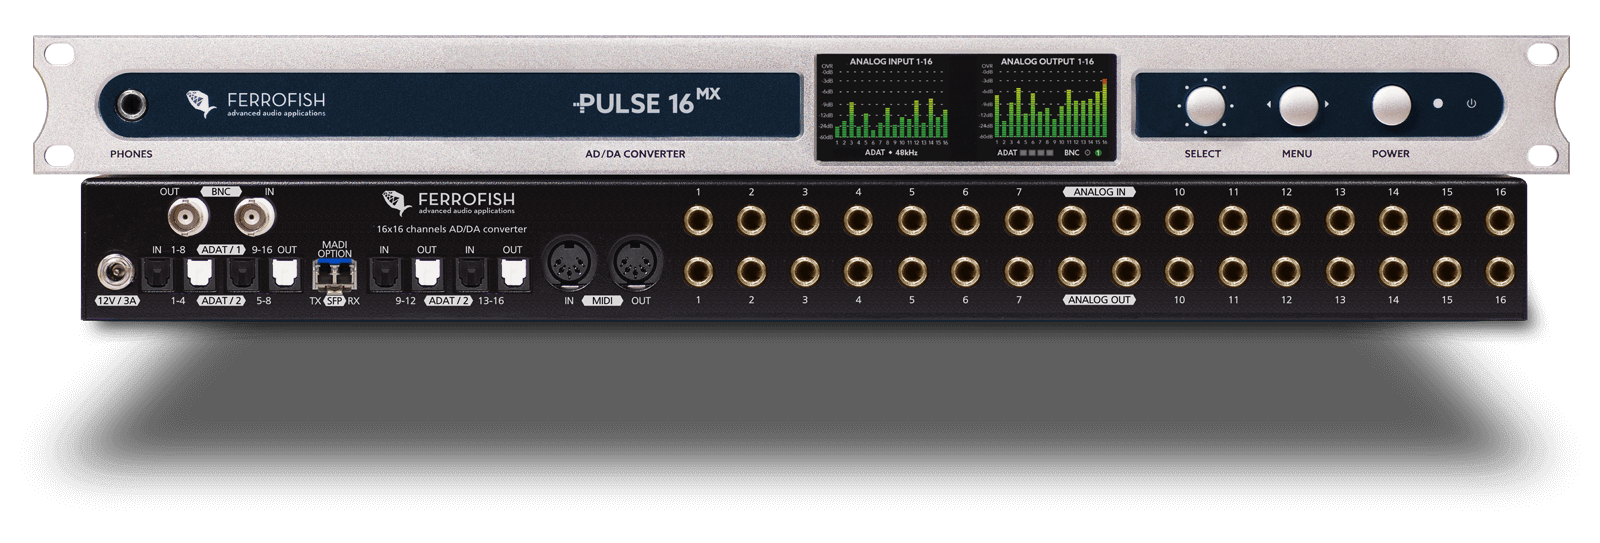 Ferrofish Pulse 16 MX +24dBu - Same as Pulse 16 MX, with analog I/O modified for +24dBu level compatibility